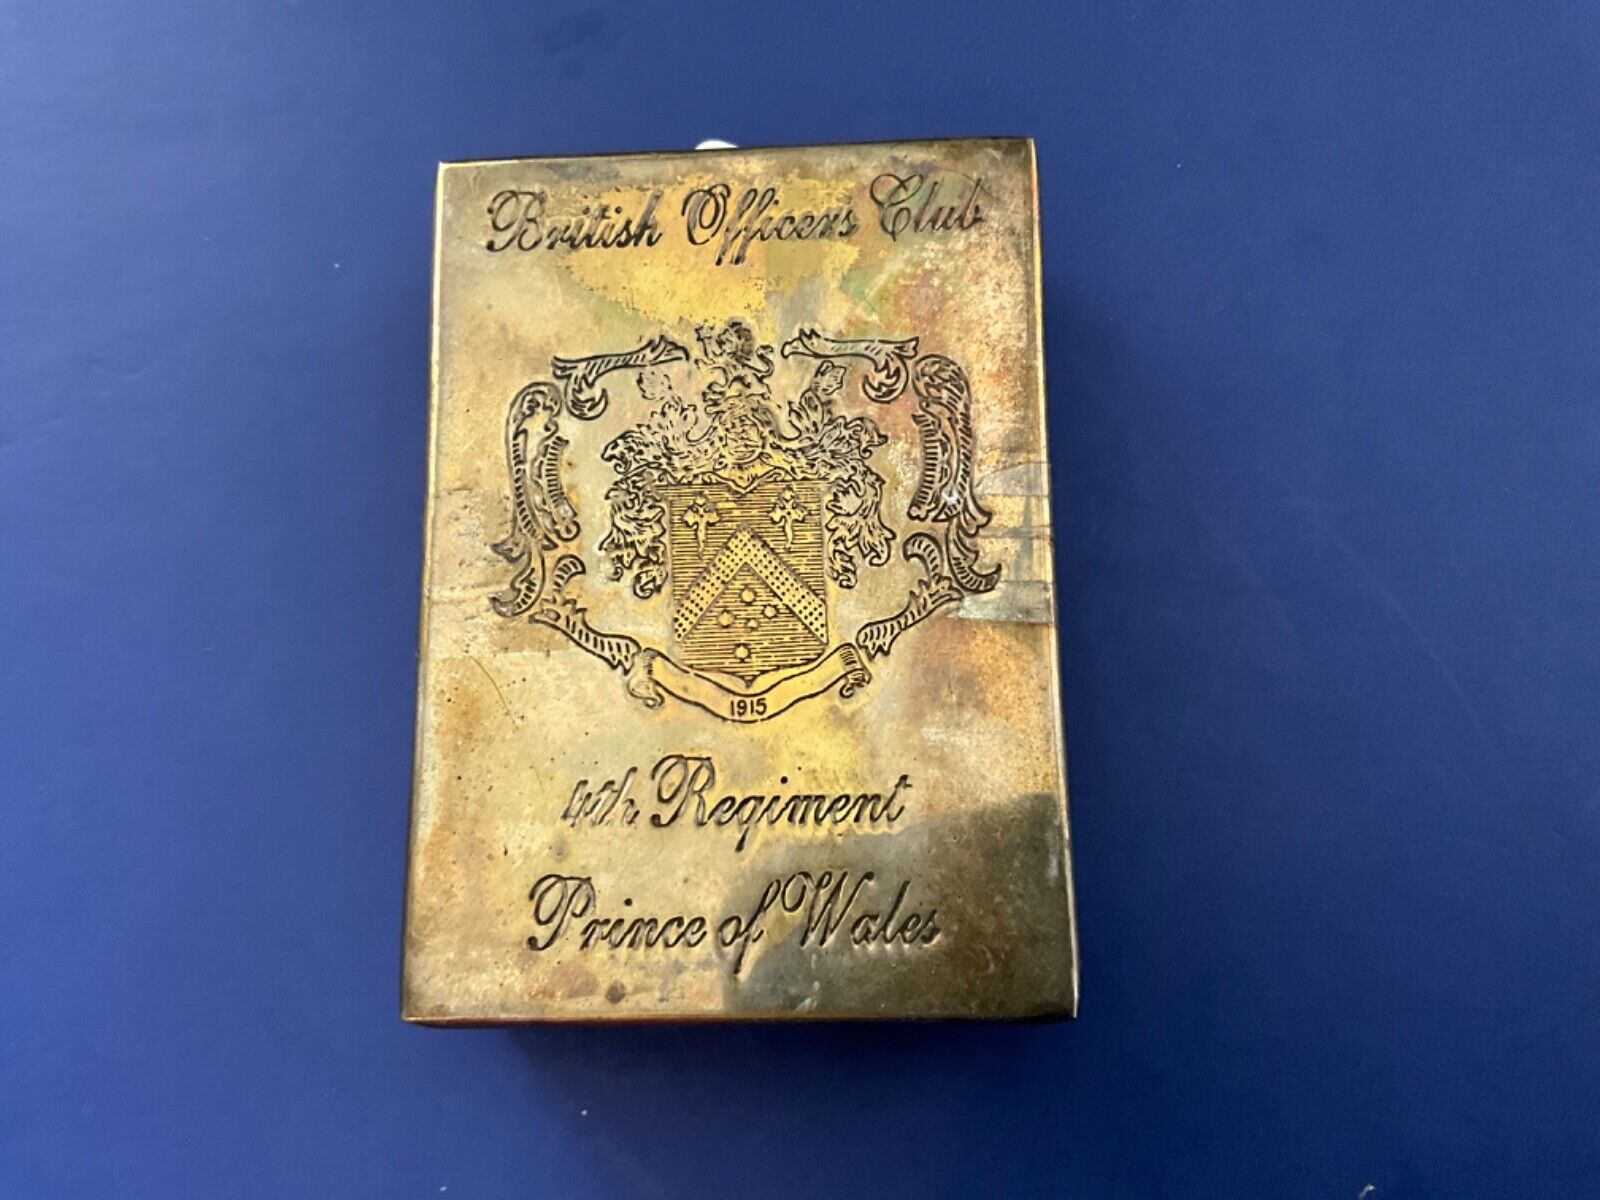 British WW1 Era Officer's Club Cigarette Box, 4th Regiment, Prince Of Wales